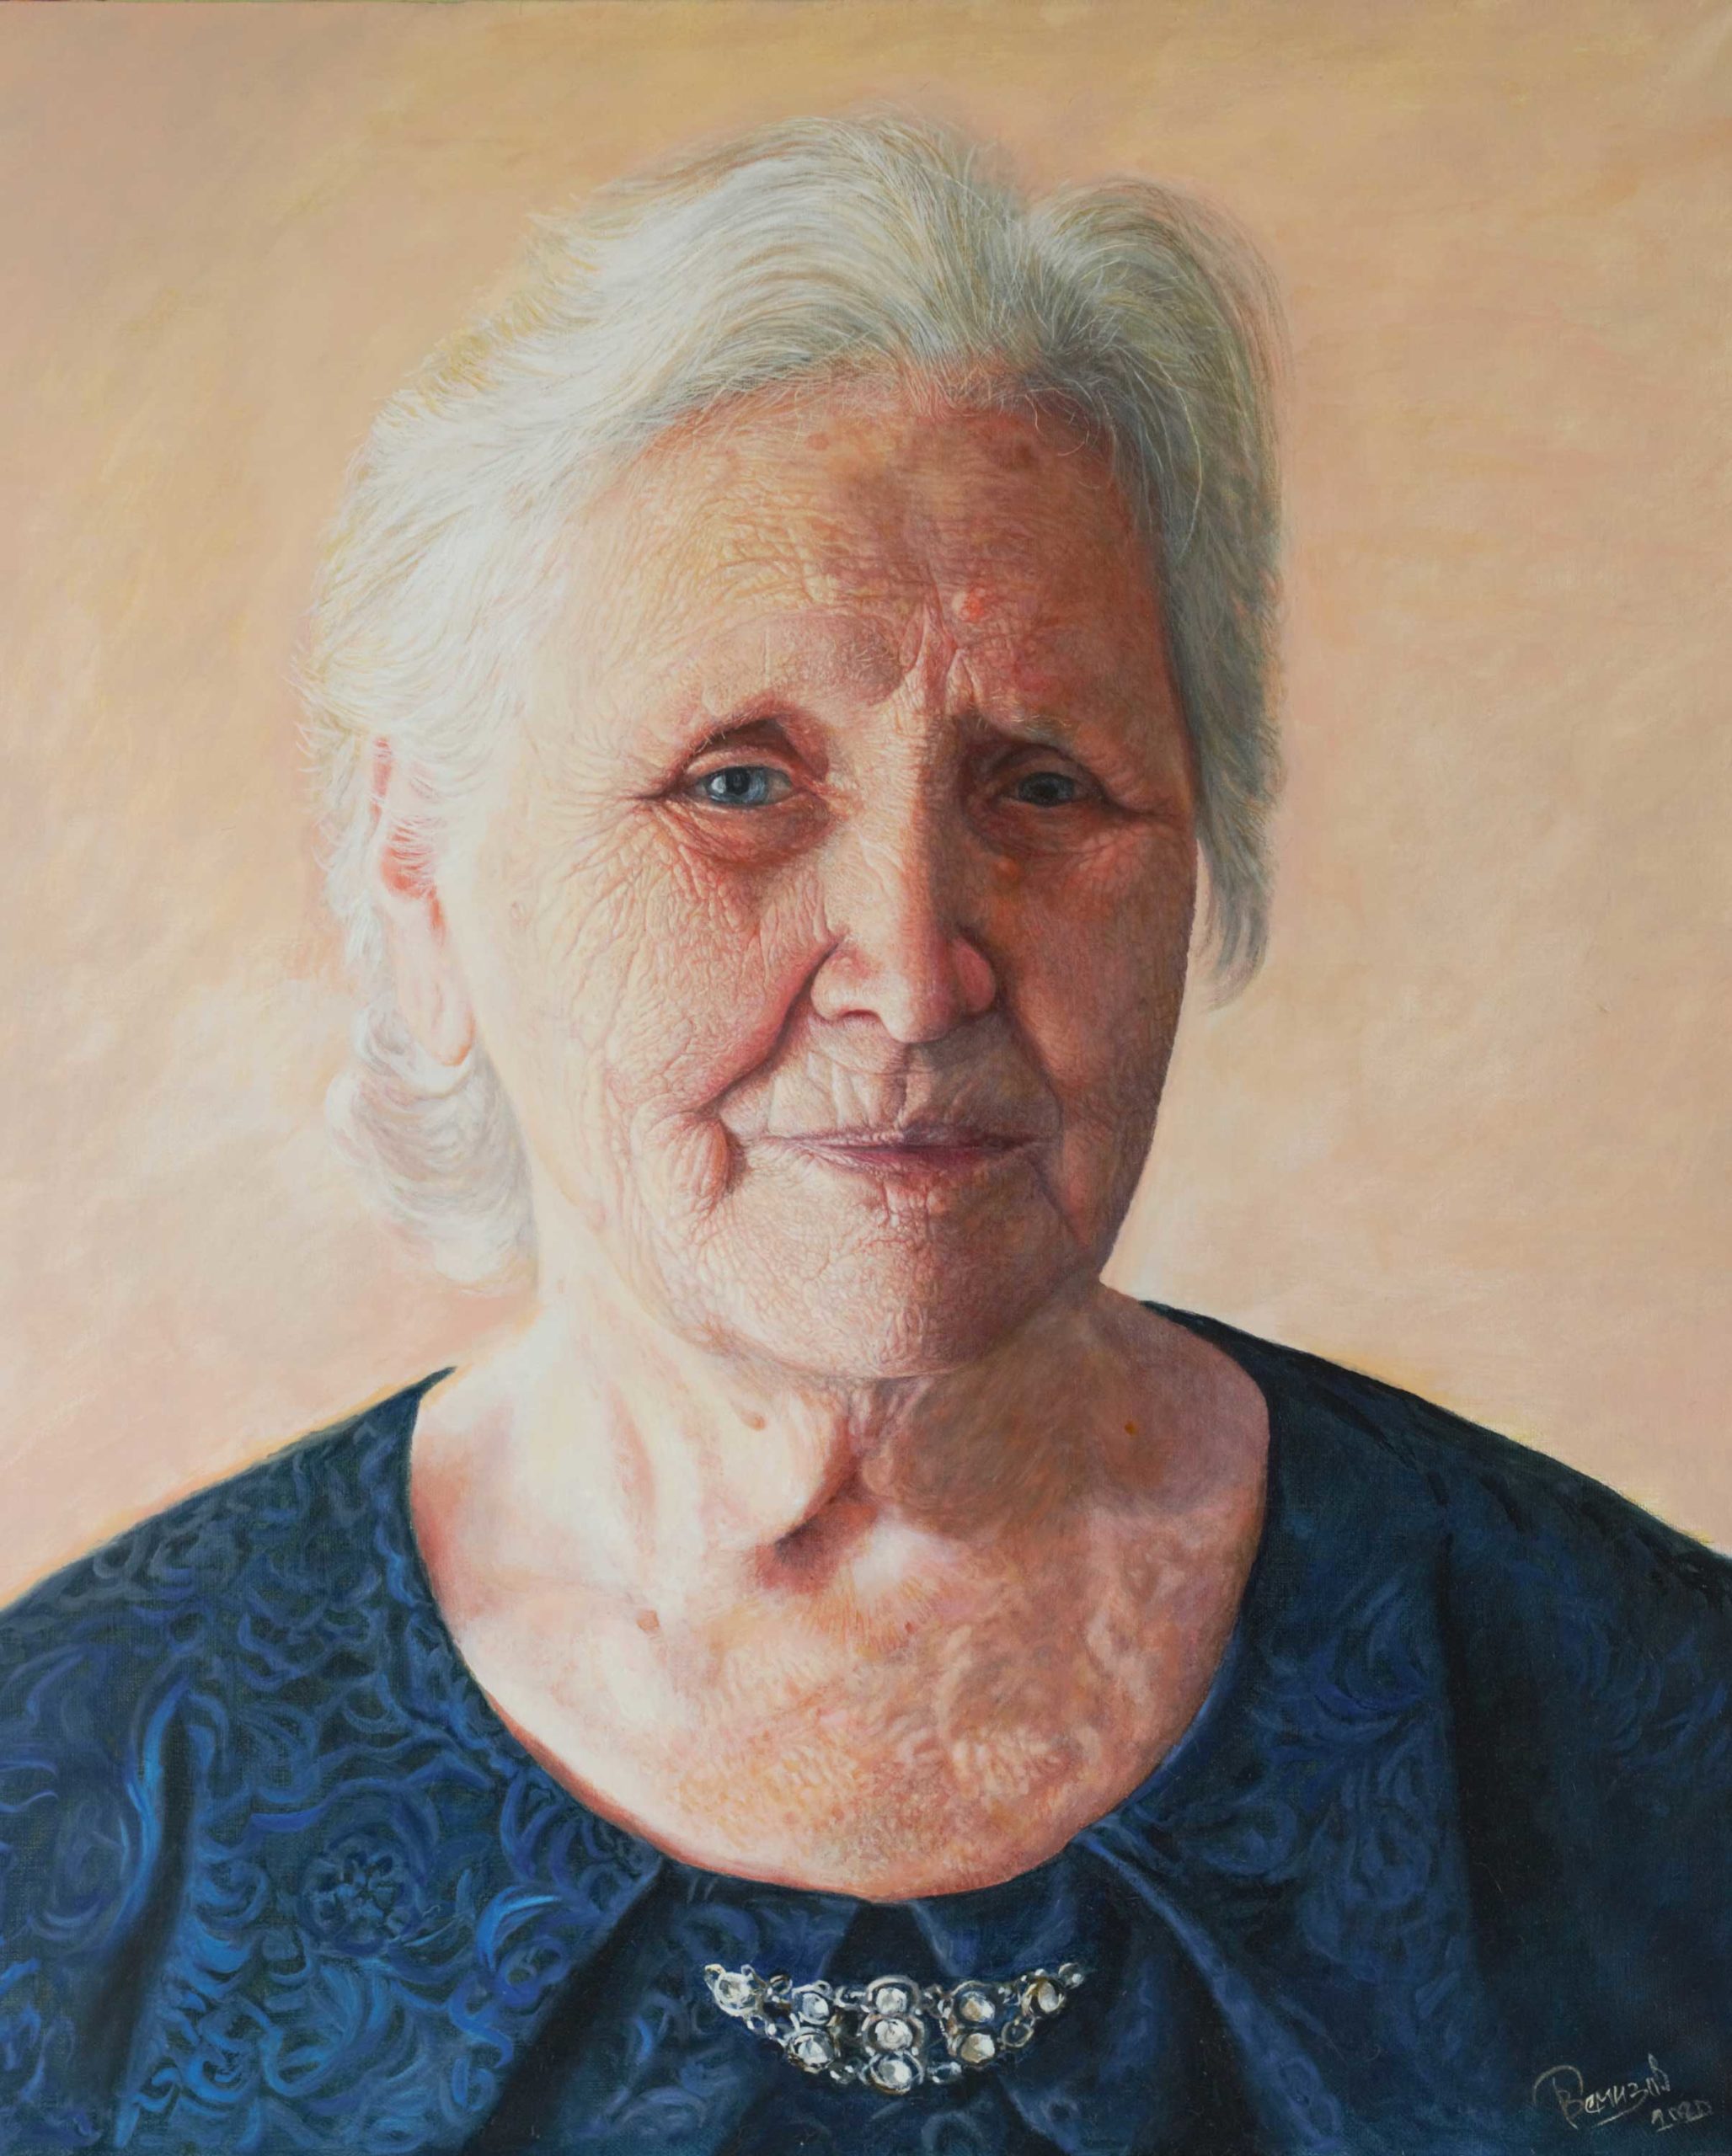 Vladimir Remizov, "Old Lady" realism portrait painting